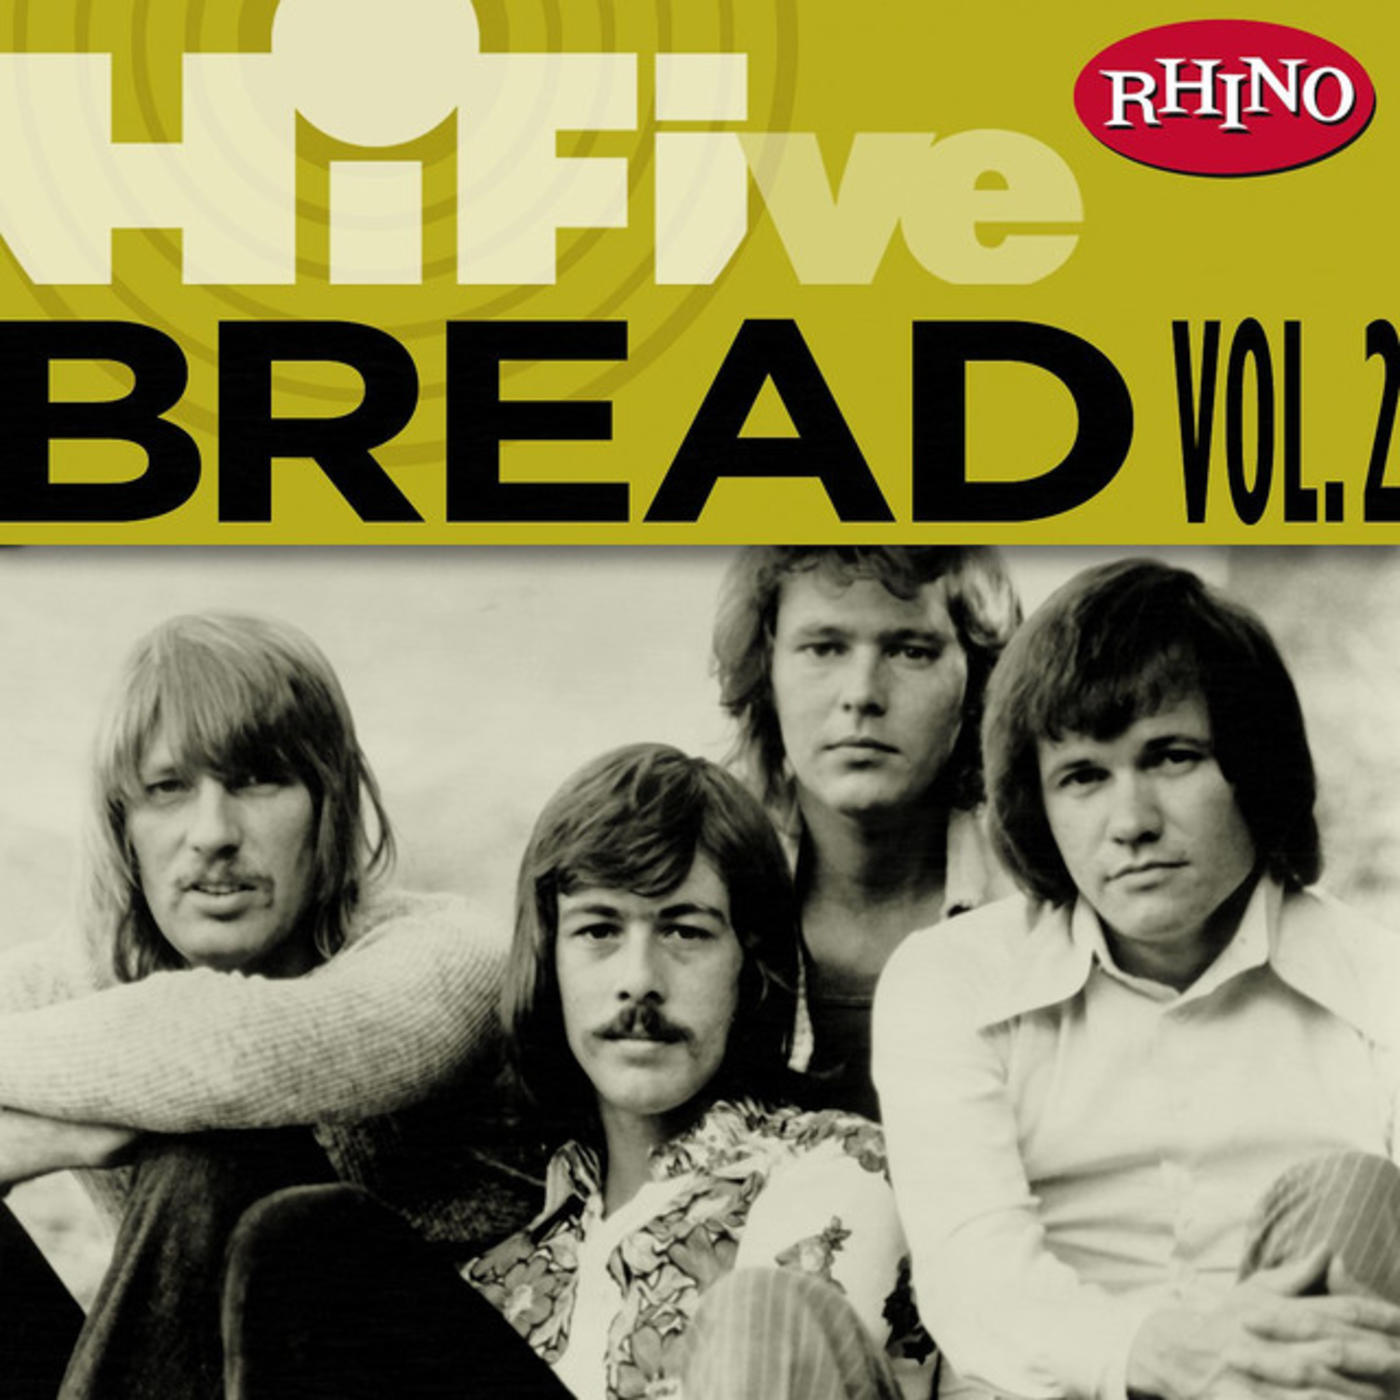 Rhino Hi-Five: Bread [Vol. 2]